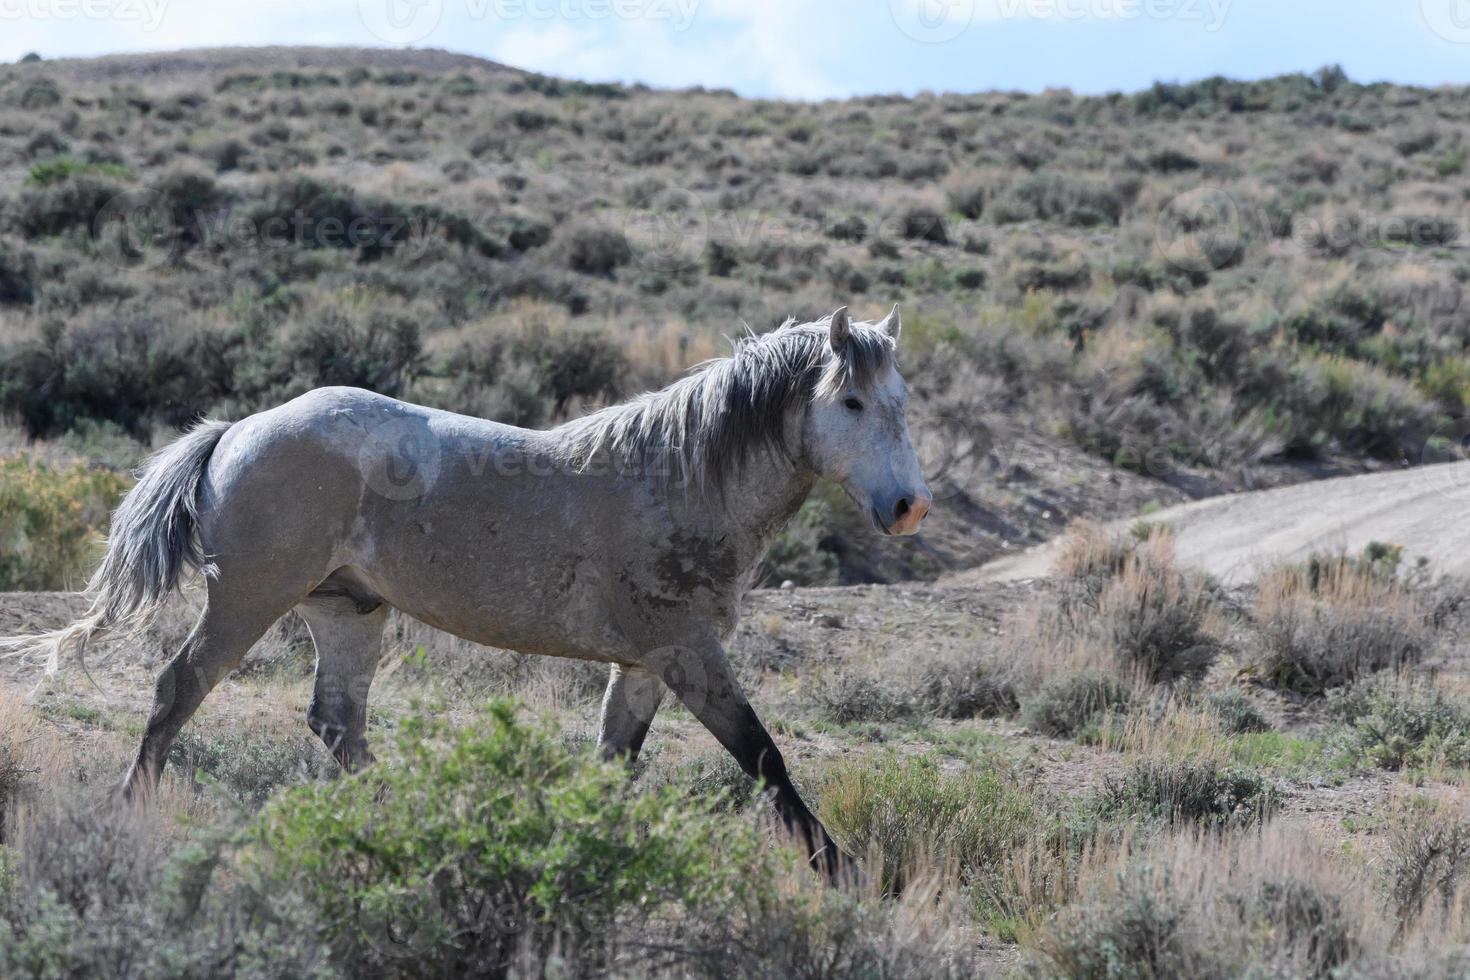 chevaux mustang sauvages dans le colorado photo